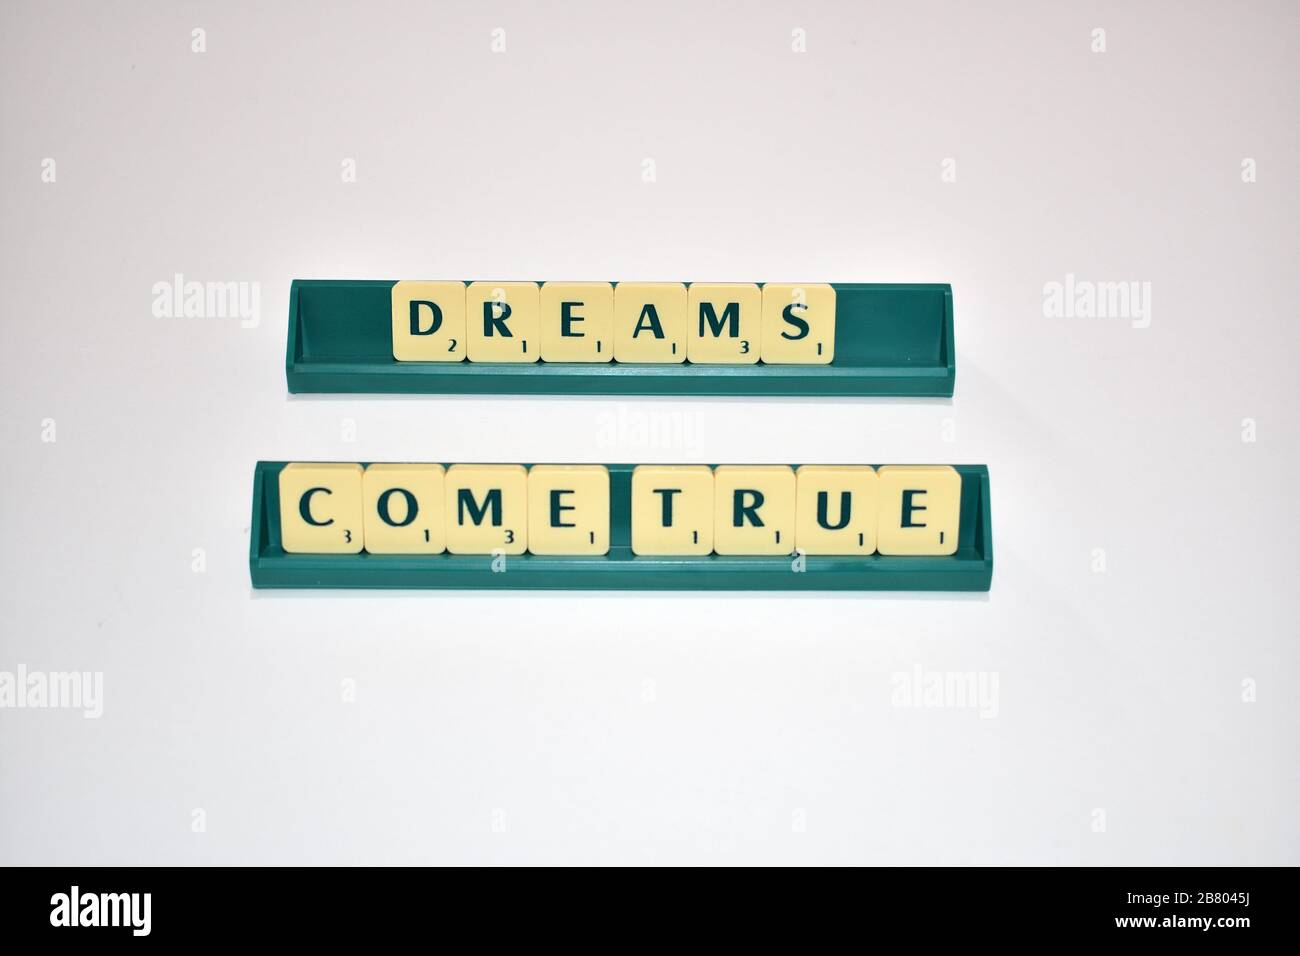 Scrabble Tiles Spell Out Dreams Come True. Motivationszitat Scrabble blockiert Briefe Grauer Hintergrund Lebenszitat induzieren Alphabet. Stockfoto